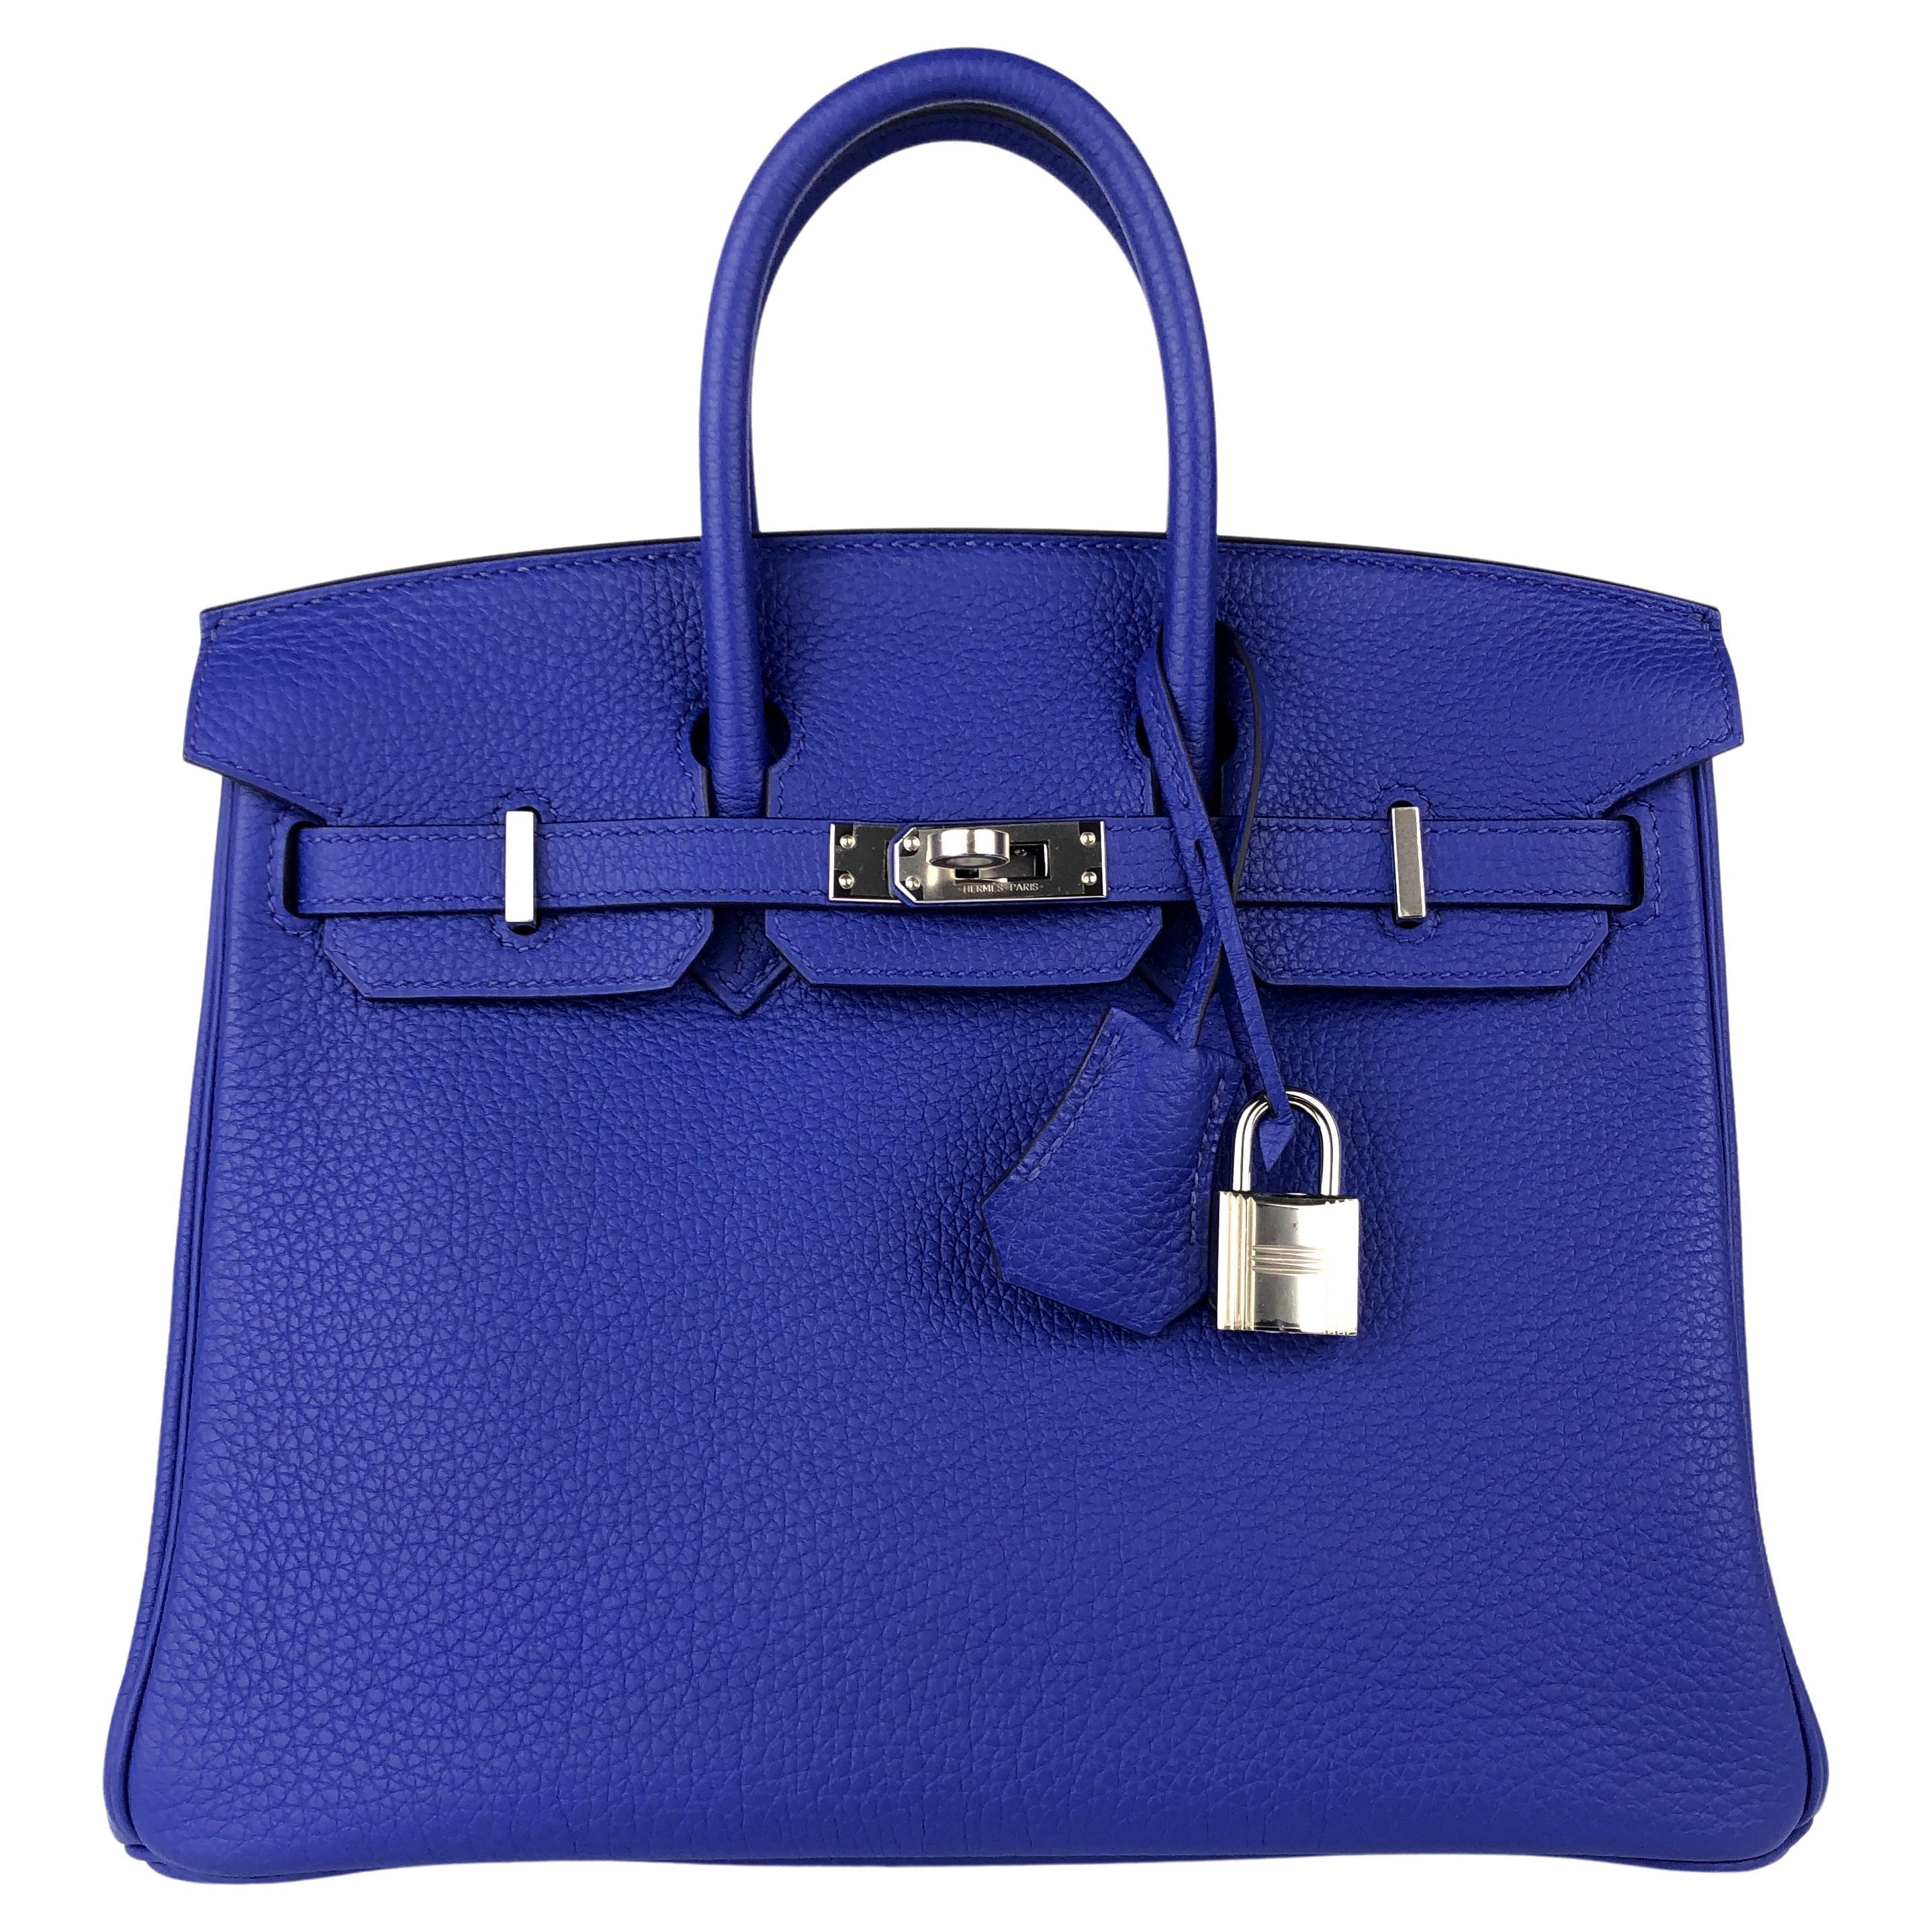 Hermes Birkin 25 Blue Bleu Royal Togo Leather Handbag Palladium Hardware NEW 